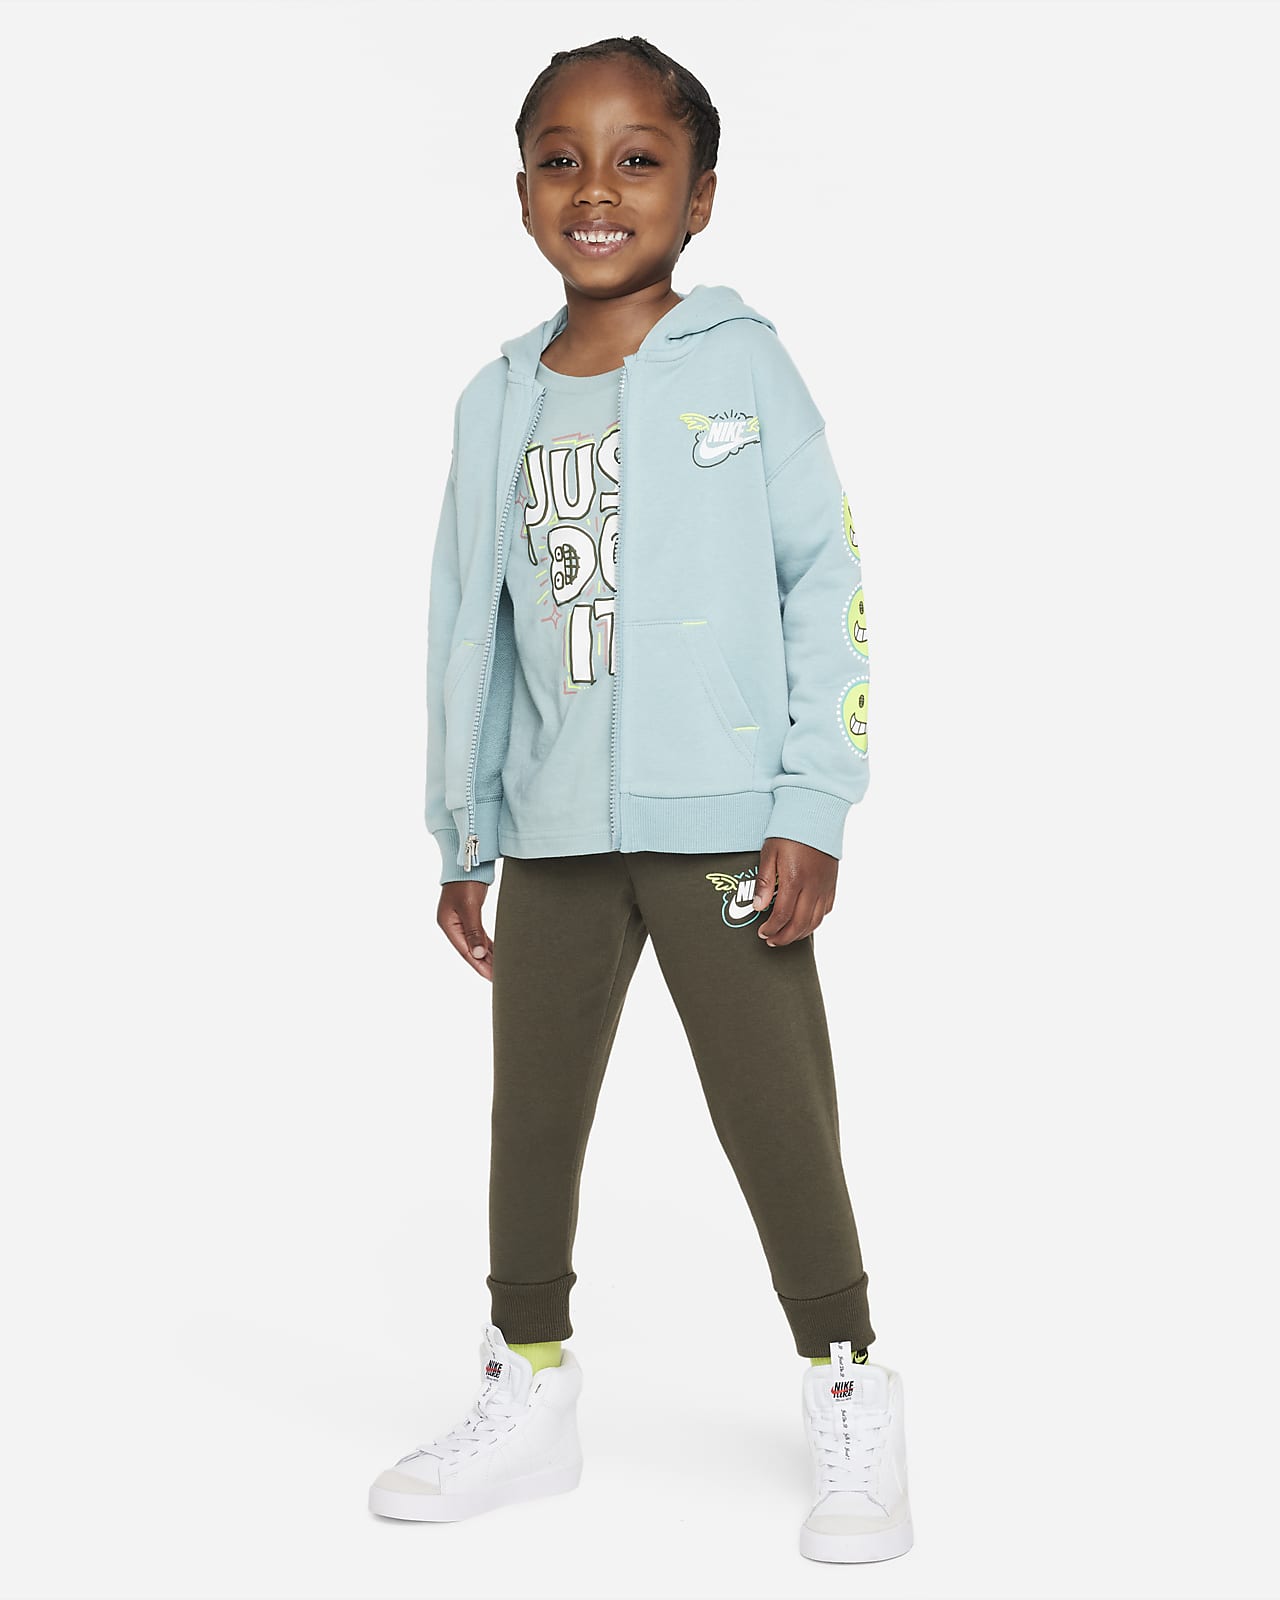 Nike Sportswear "Art of Play" French Terry Full-Zip Set Toddler 2-Piece Set